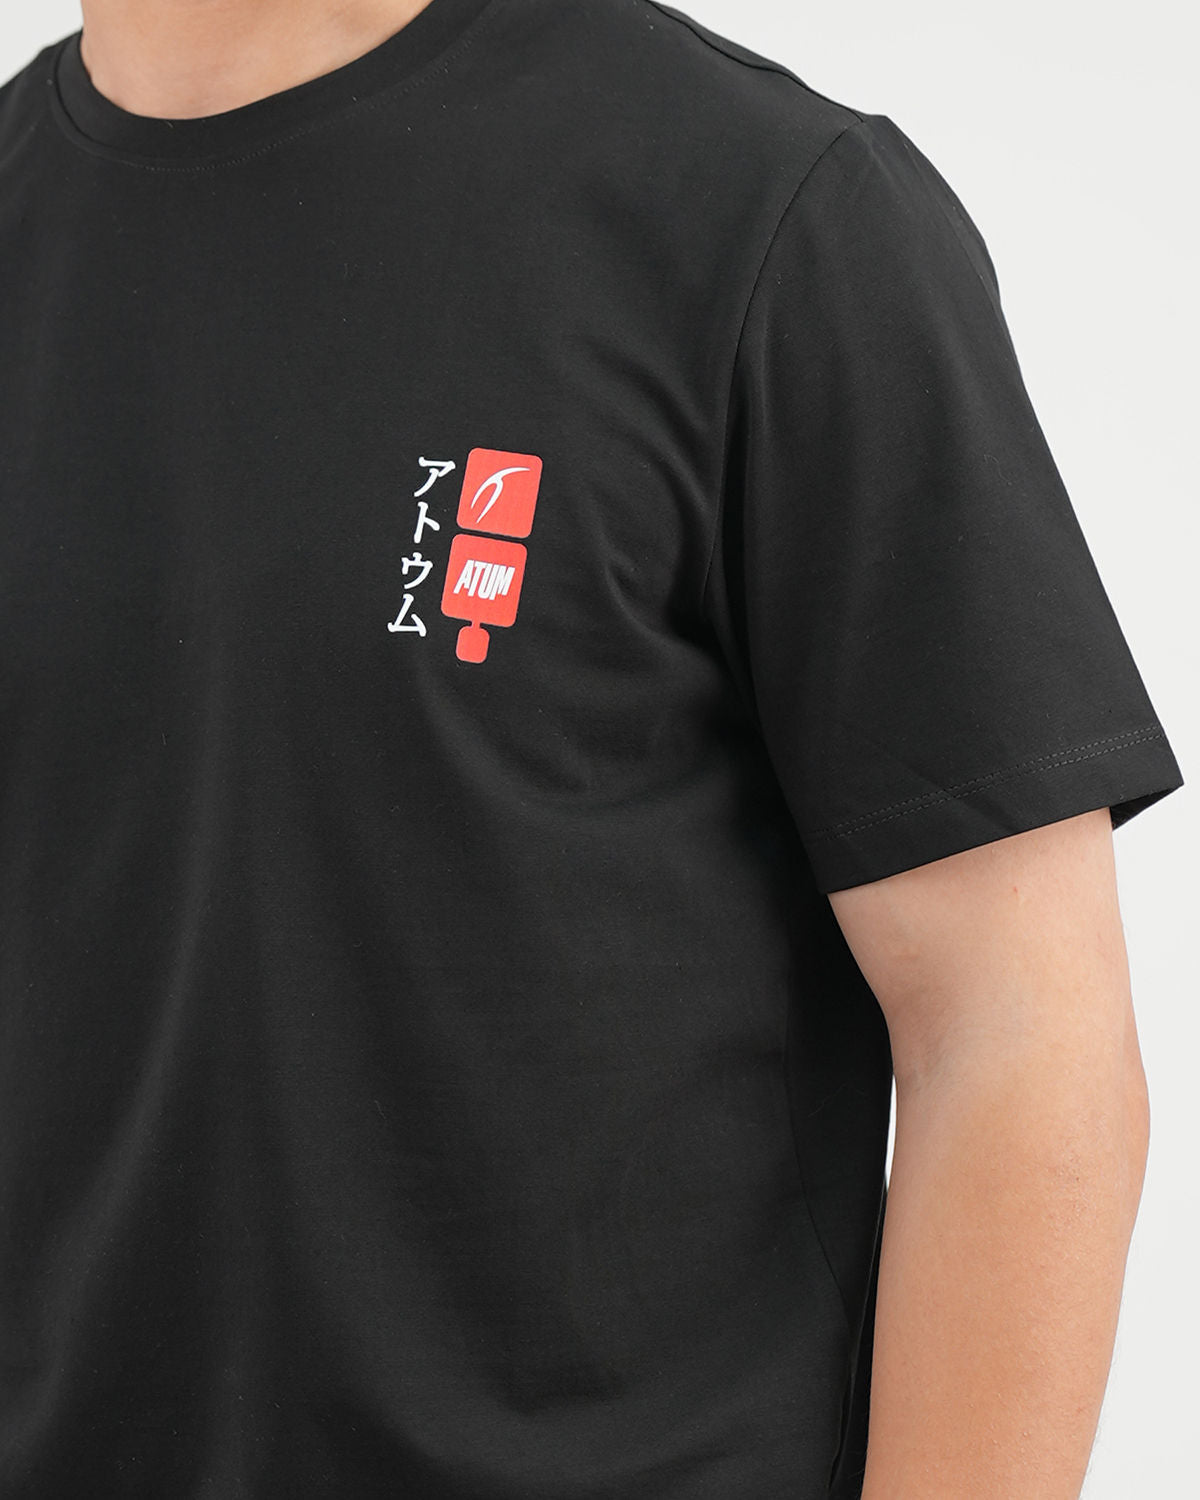 Cobra Strike Graphic Men's Tee - Black with red atum's logo